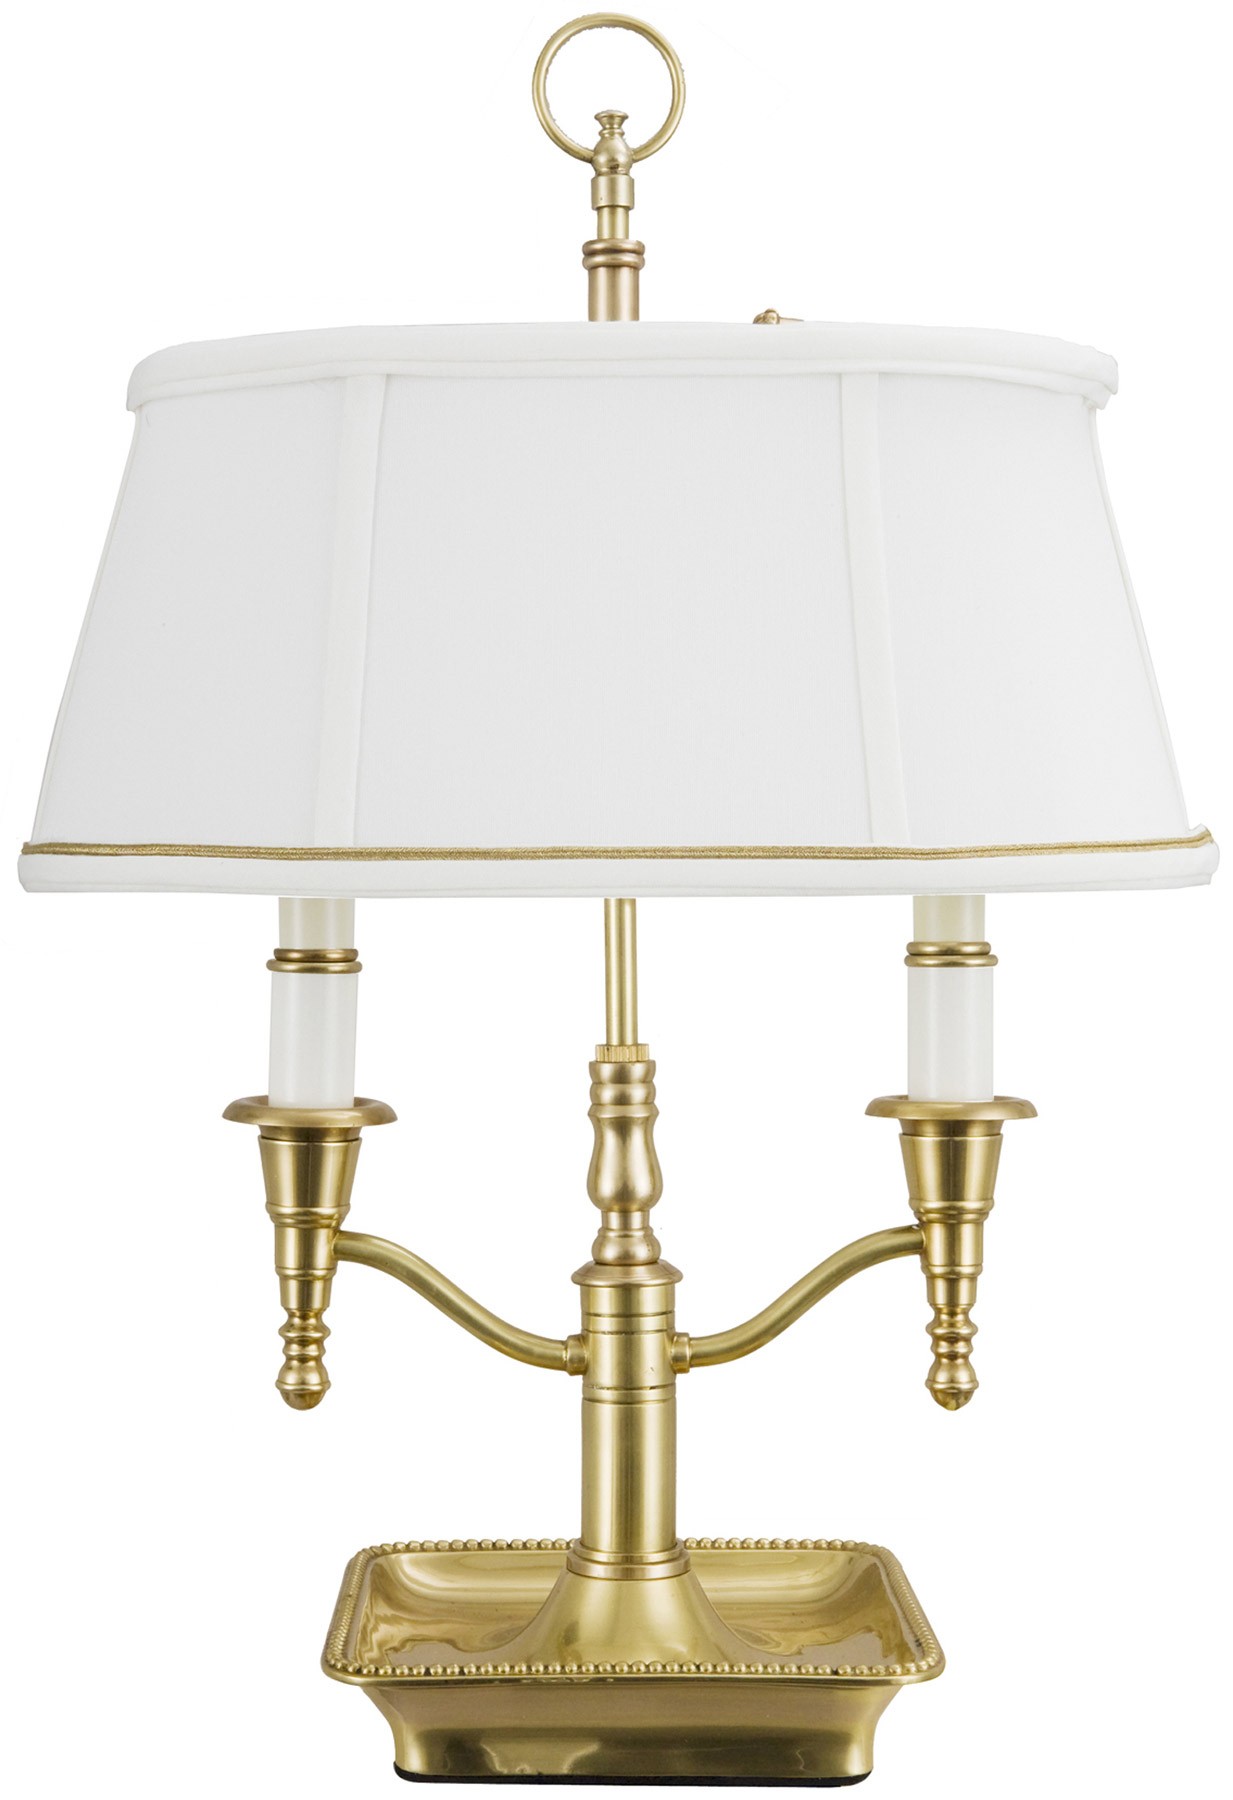 Frederick cooper 65138 bartemius table lamp